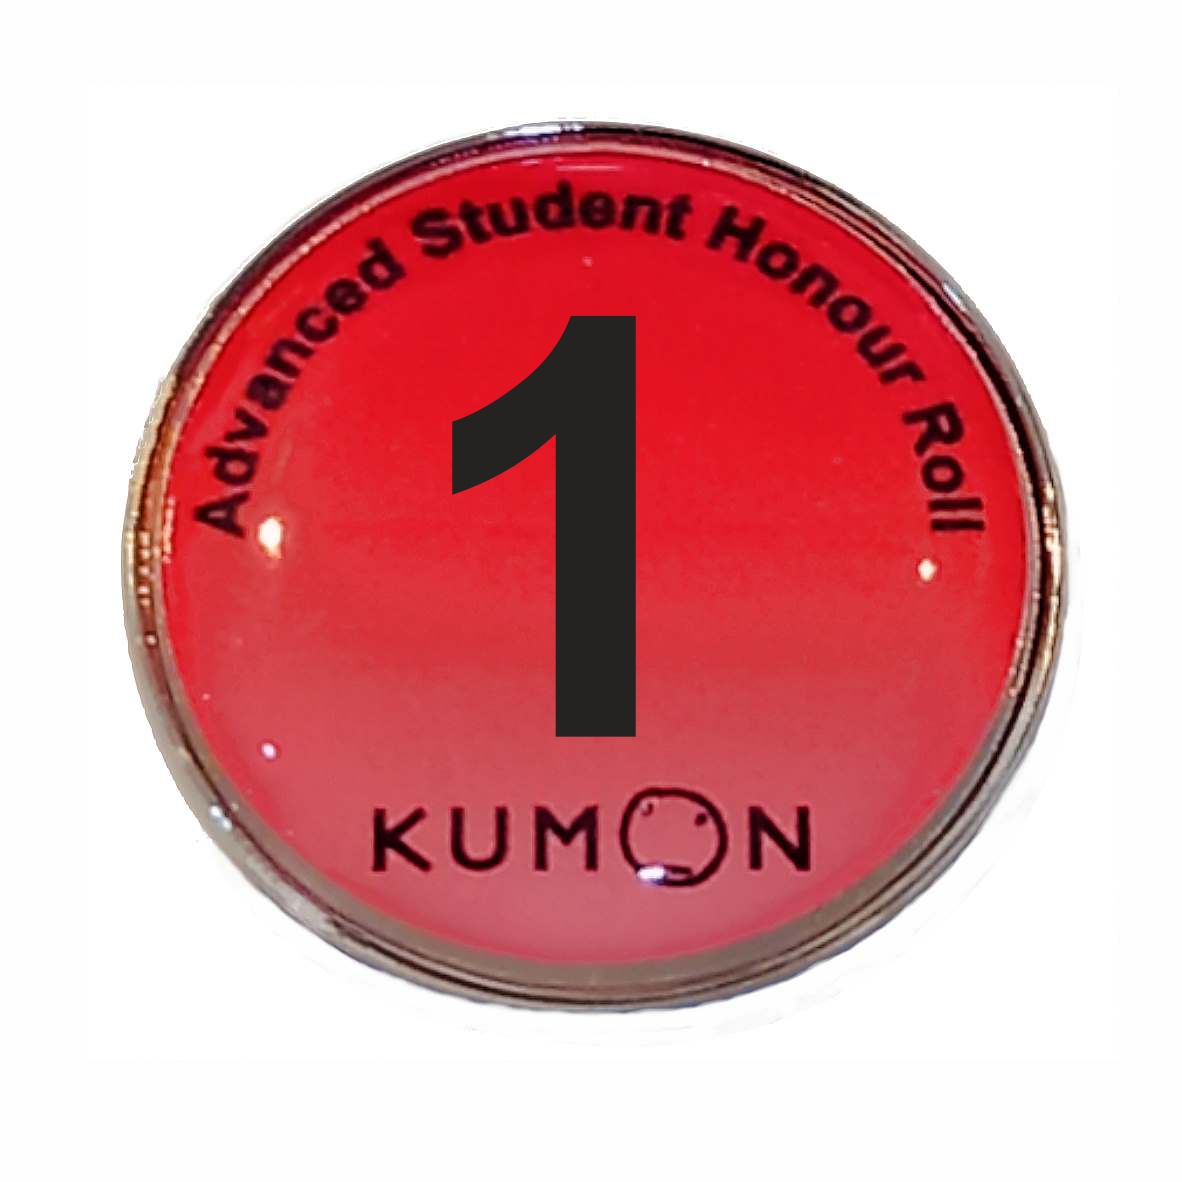 KUMON Advanced Student 1 red 27mm Round